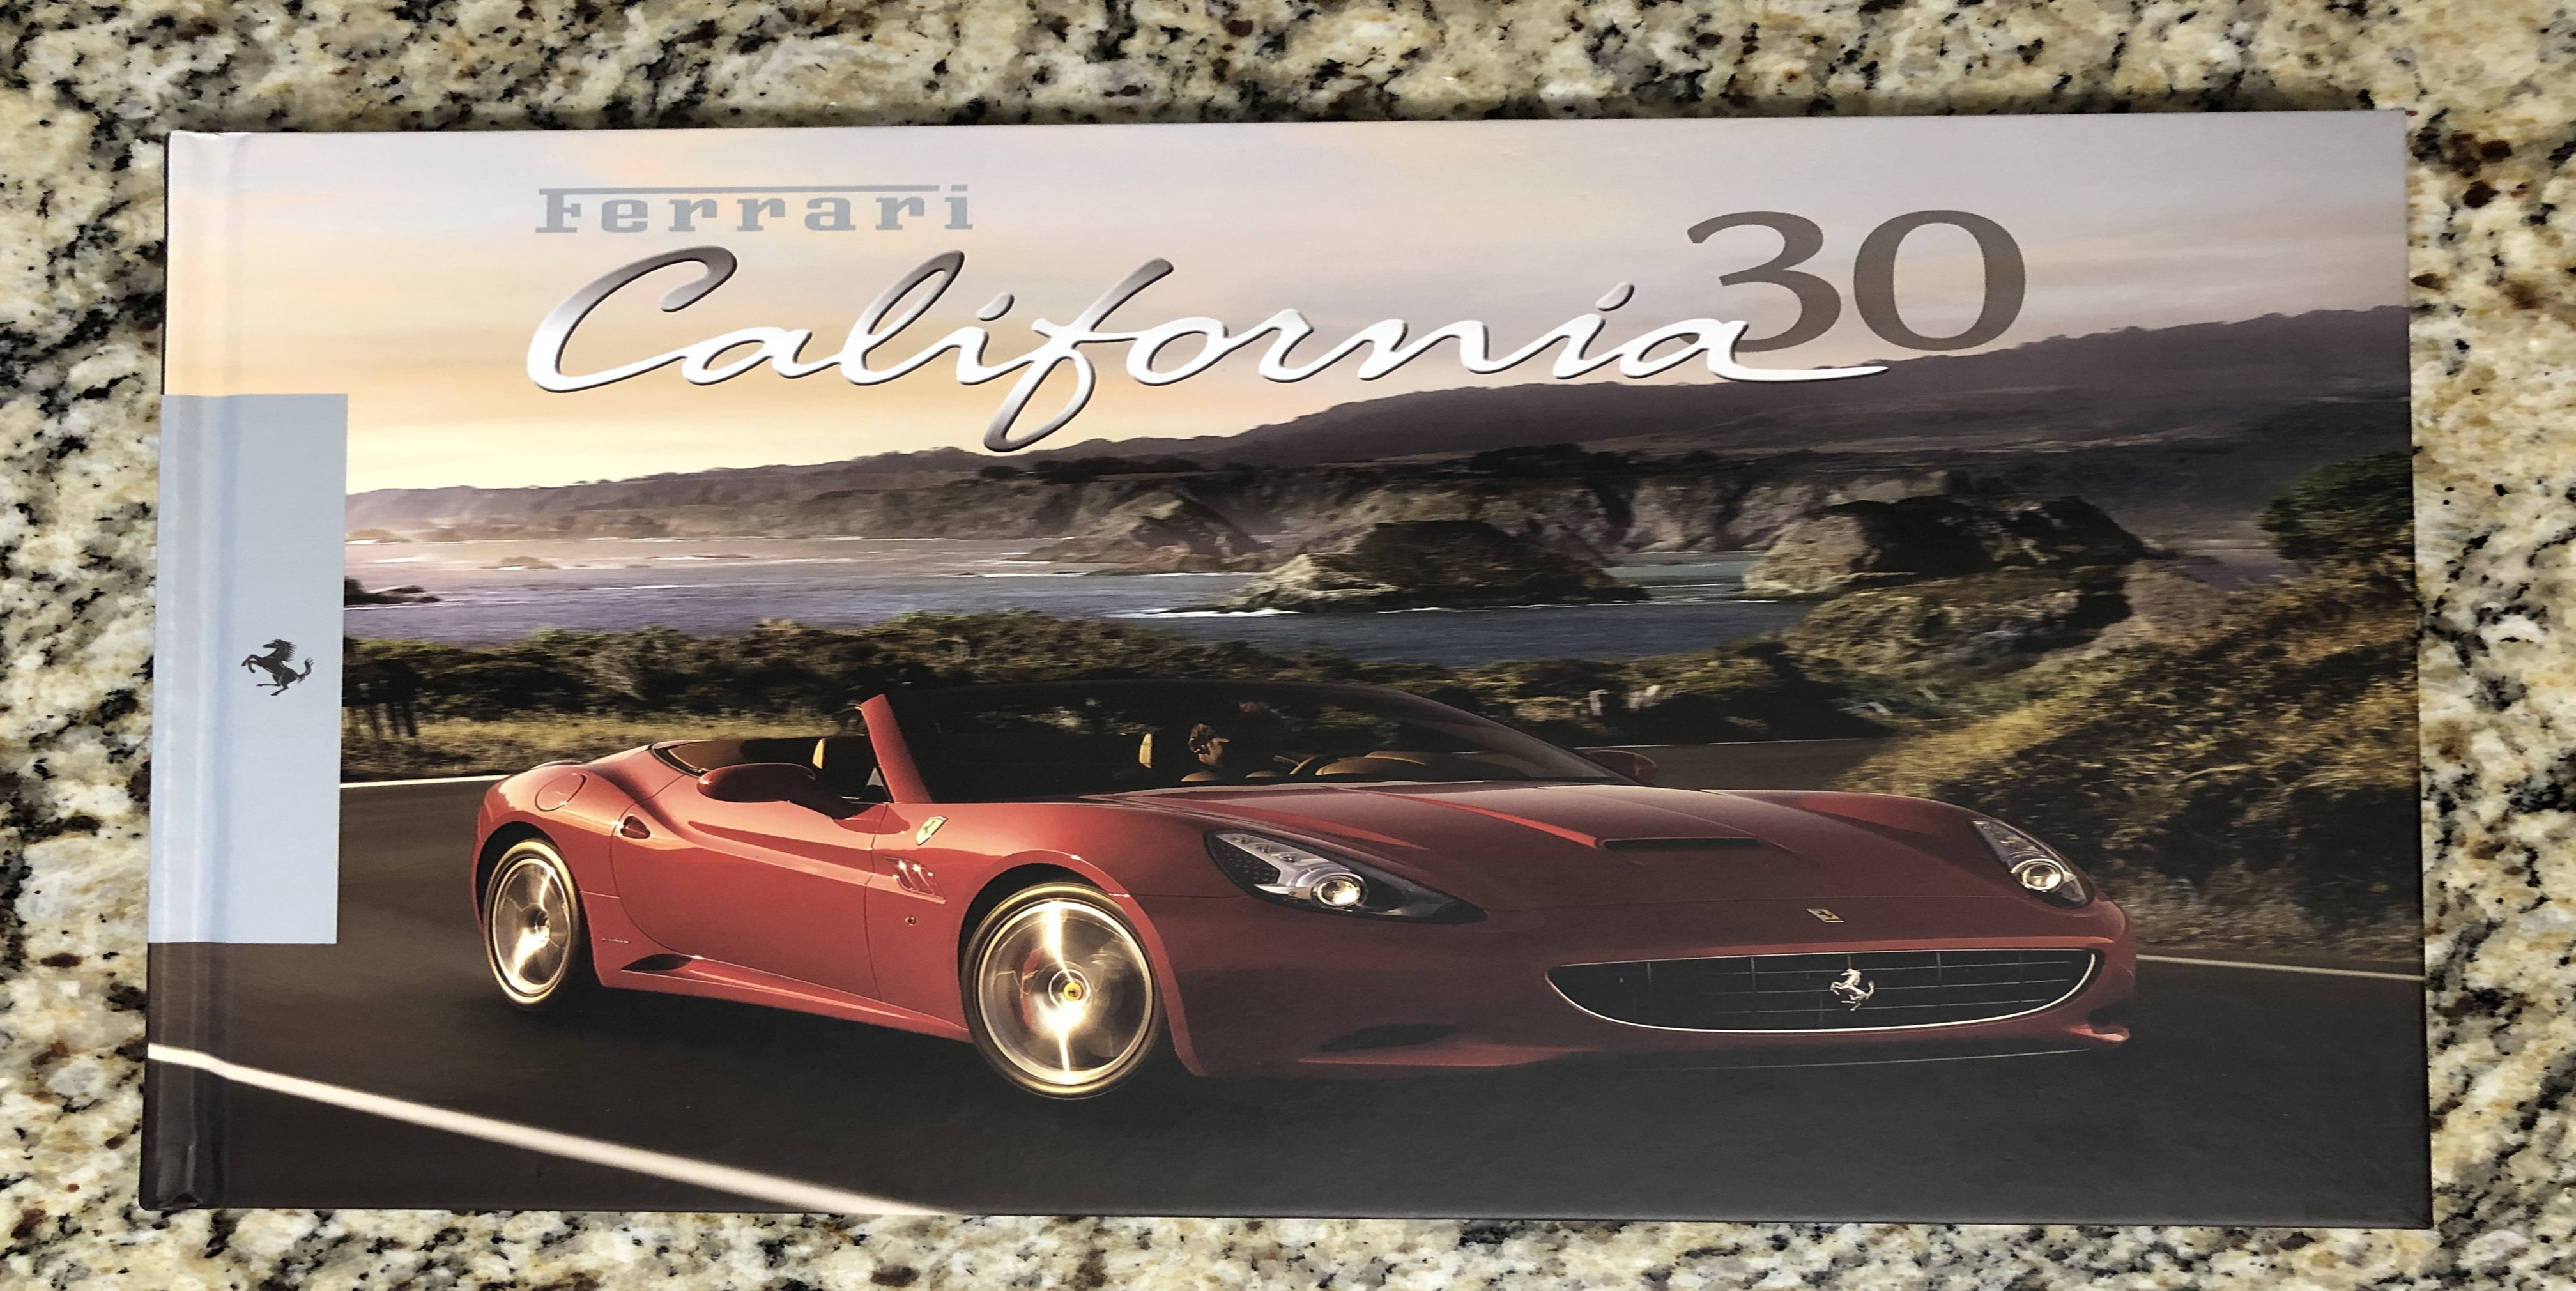 Ferrari California 30 Brochure